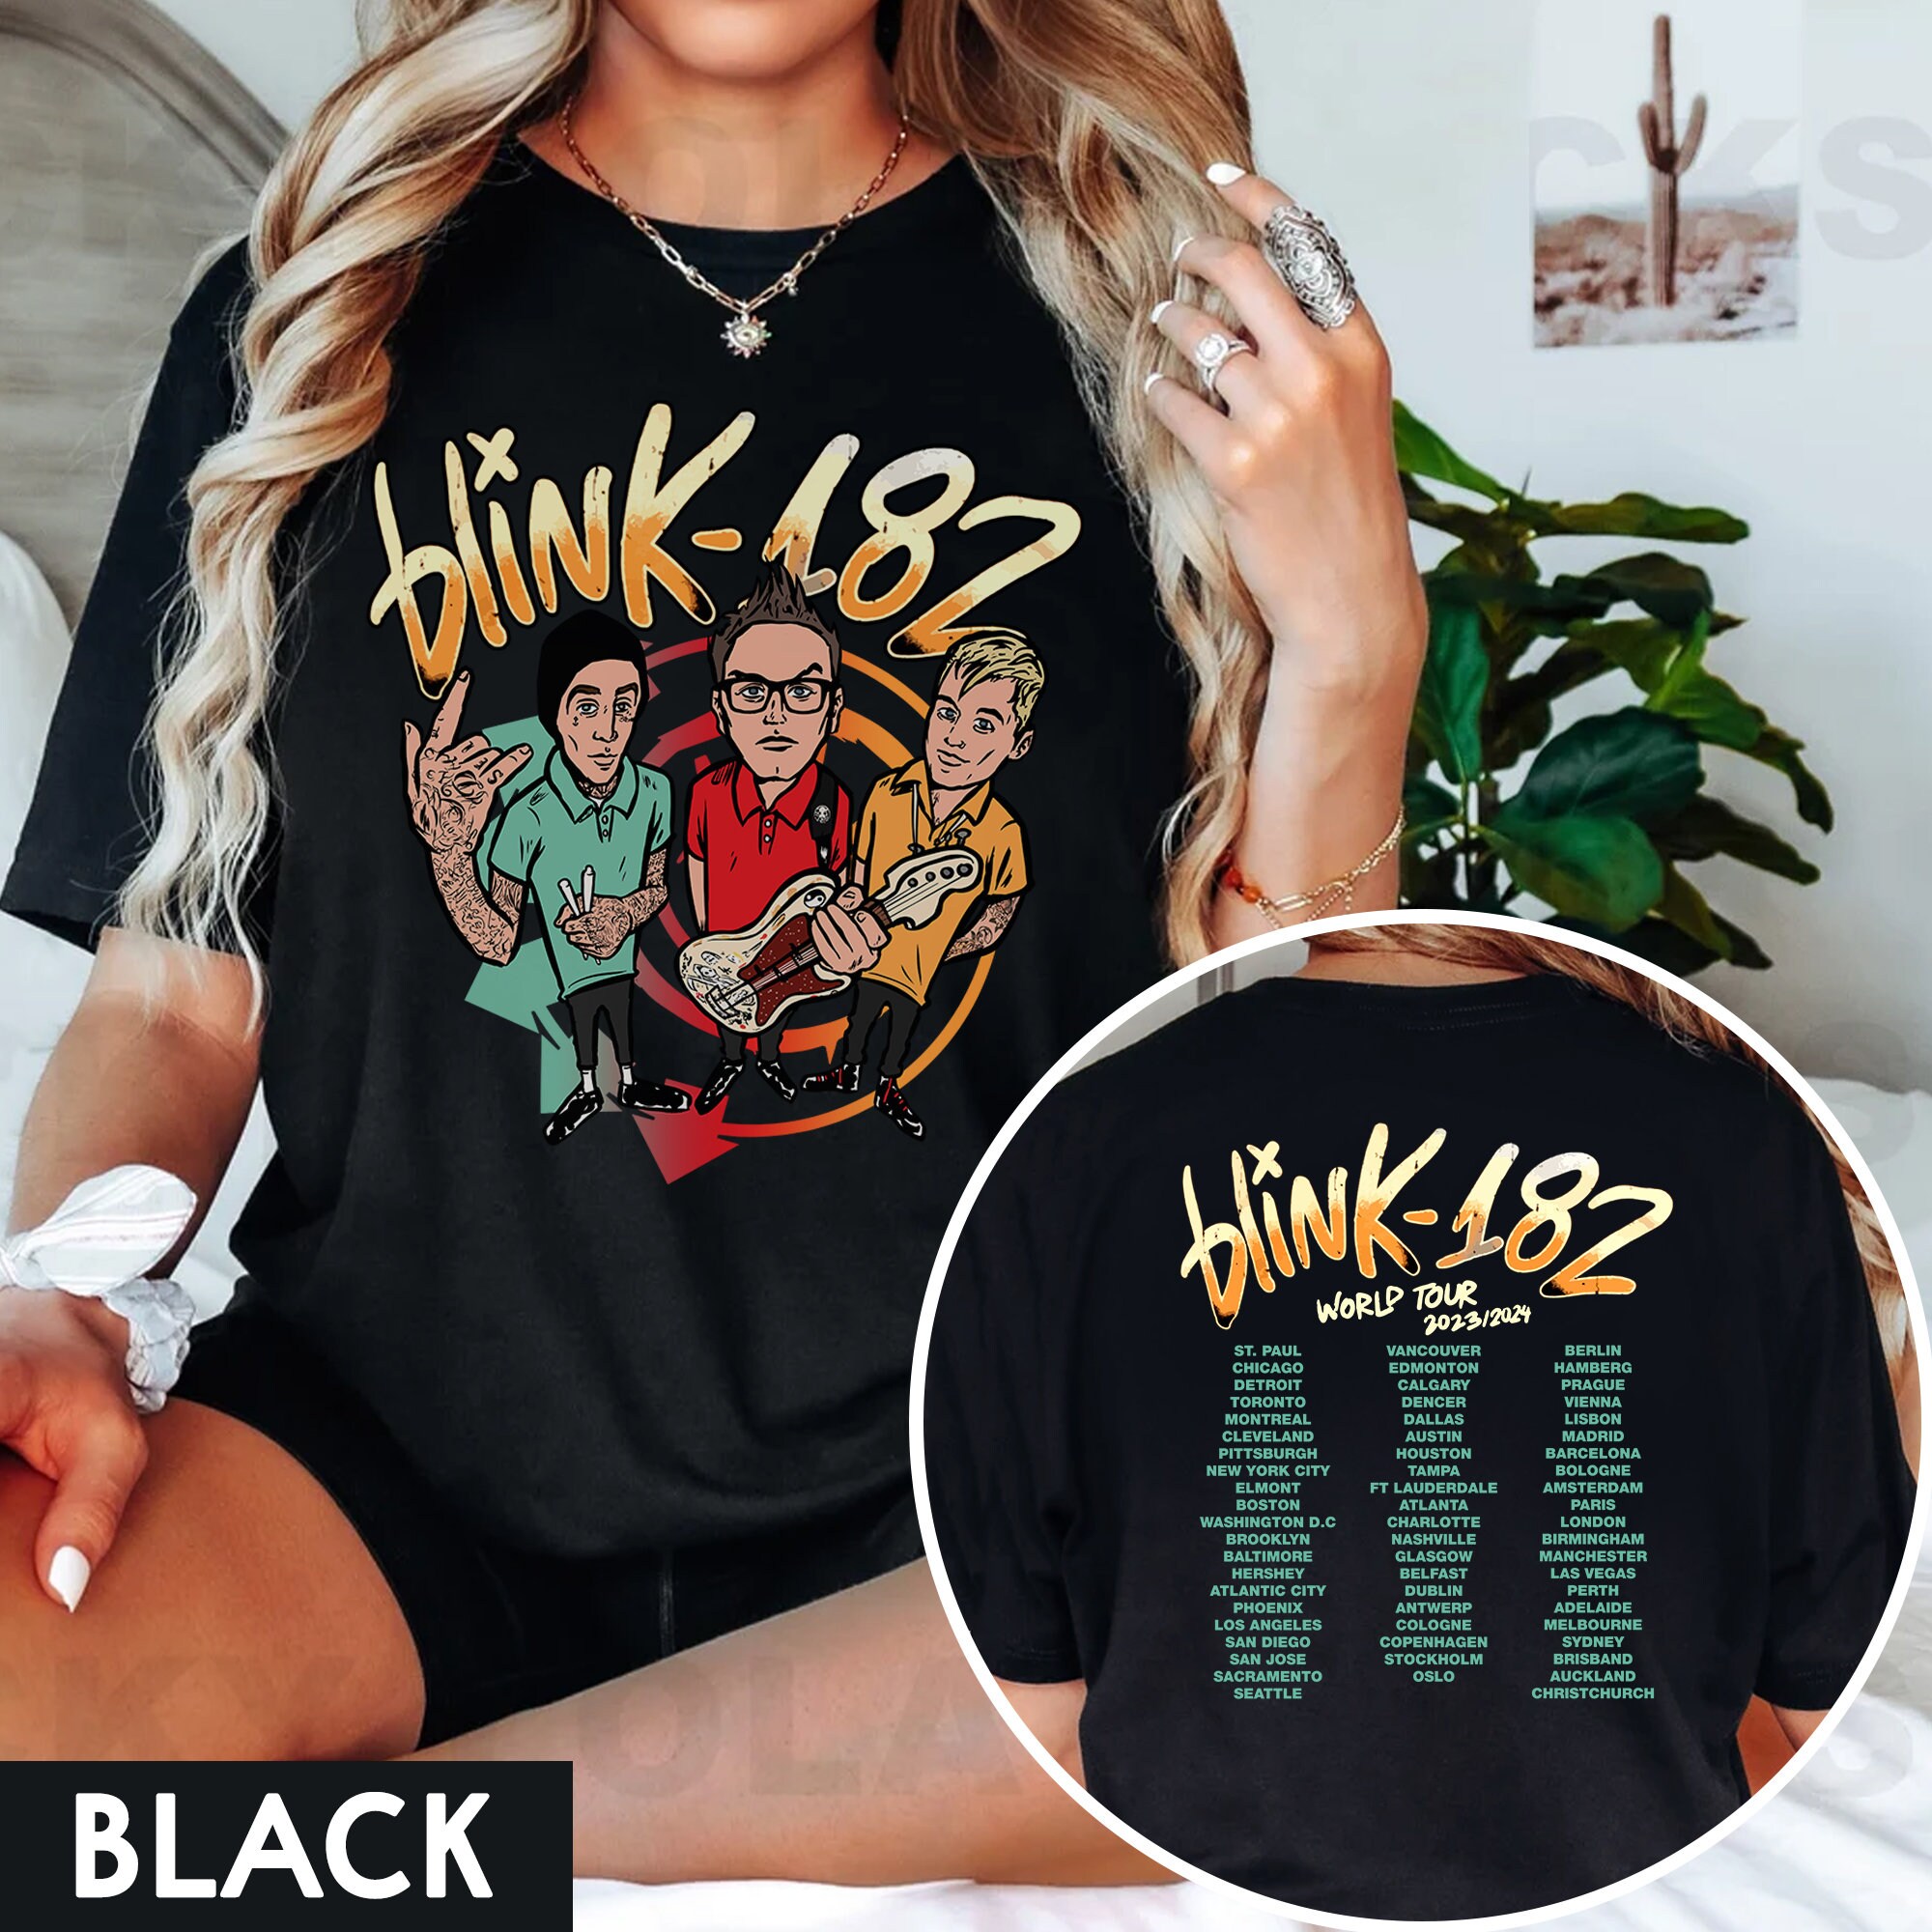 Blink 182 Rock Shirt Vintage Band Tour Merch Tee - iTeeUS